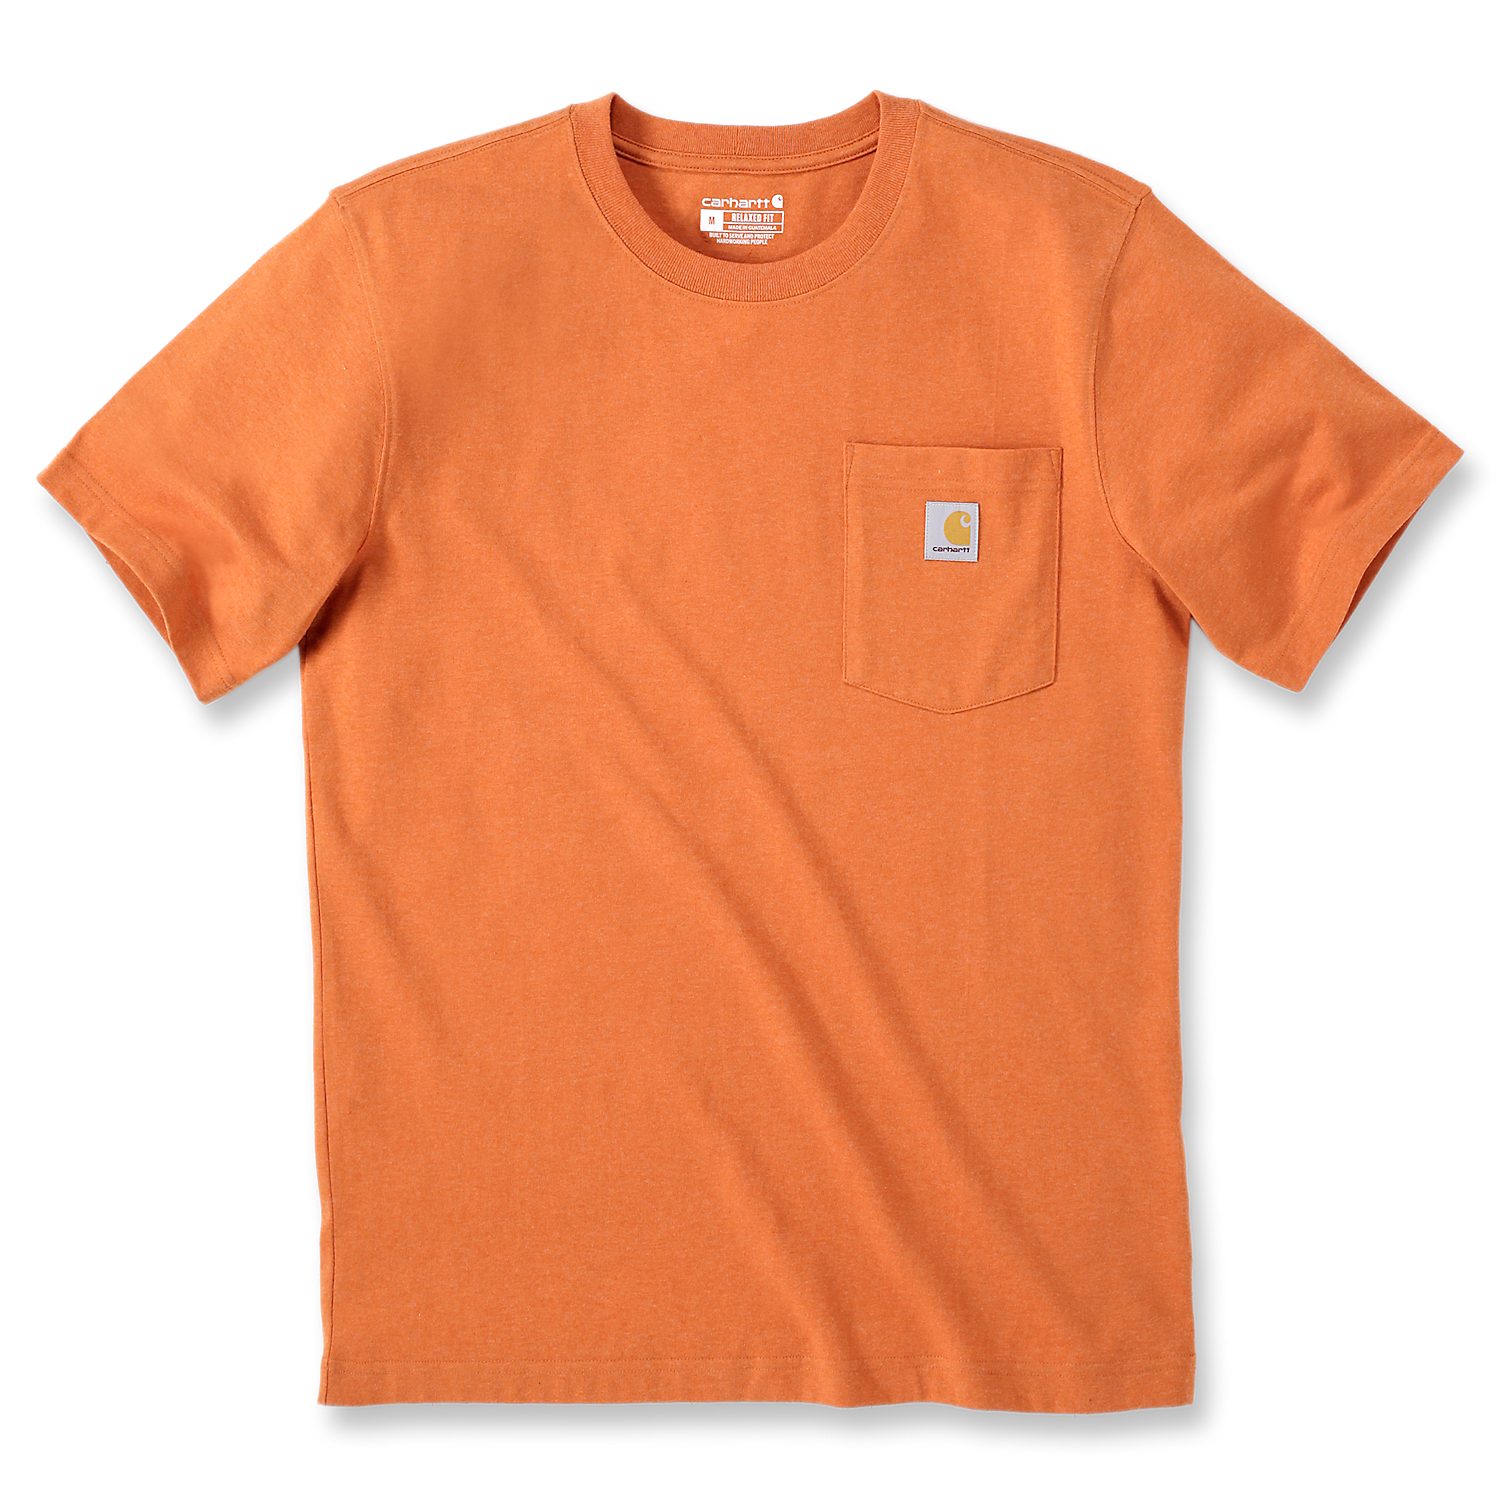 T-Shirt Marmalade Pocket K87 Carhartt Fit Relaxed